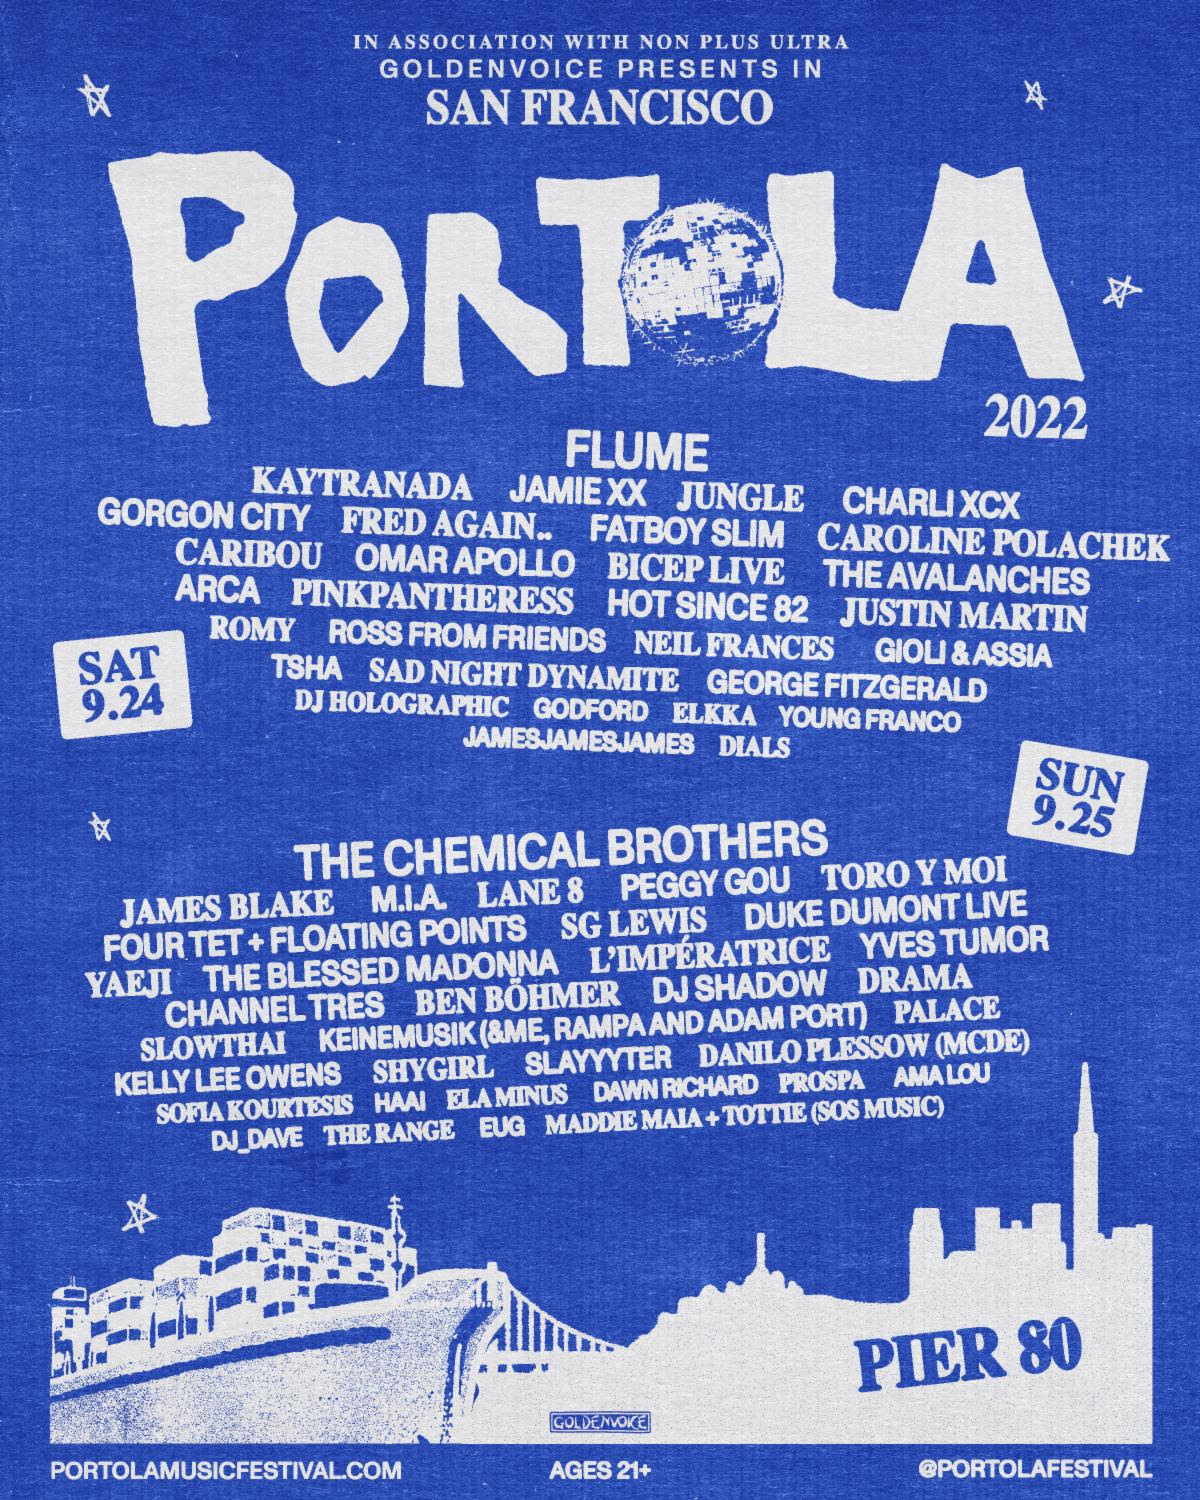 Portola Music Festival at Pier 80 in San Francisco September 24, 2022